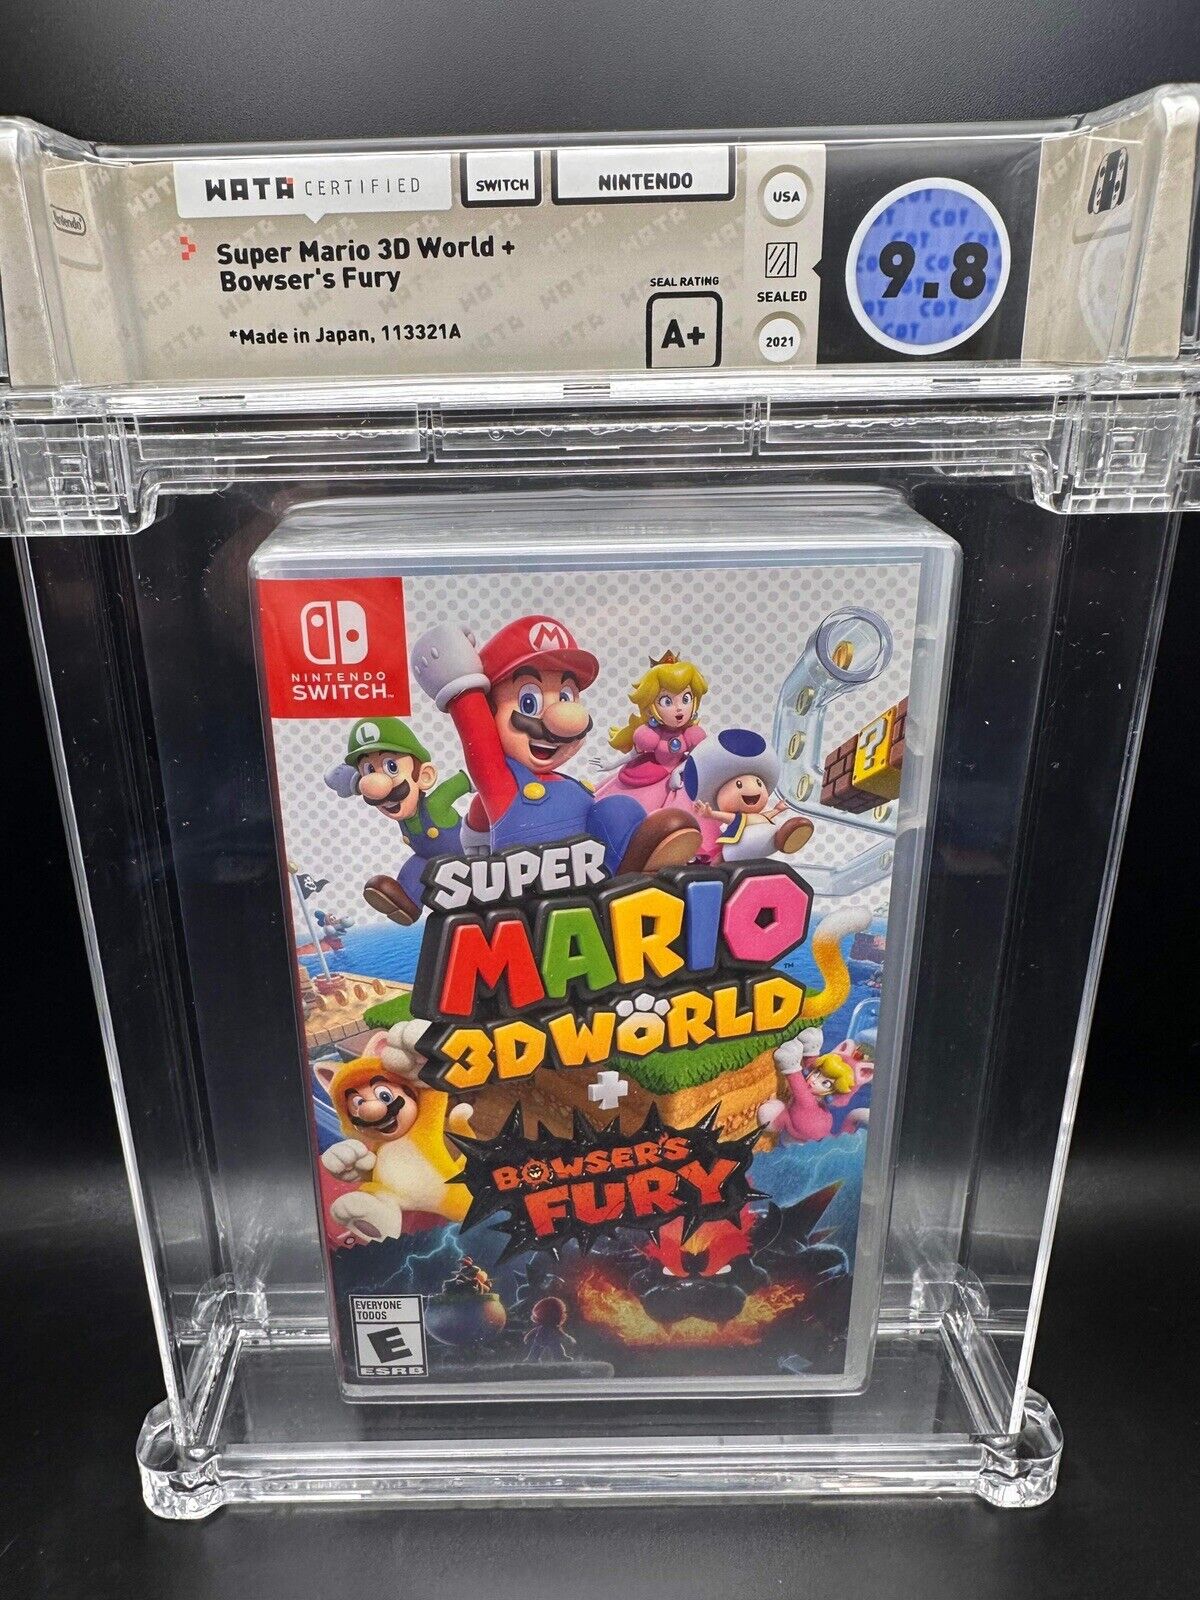 Super Mario 3D World + Bowser's Fury WATA 9.8 A+ - Nintendo Switch